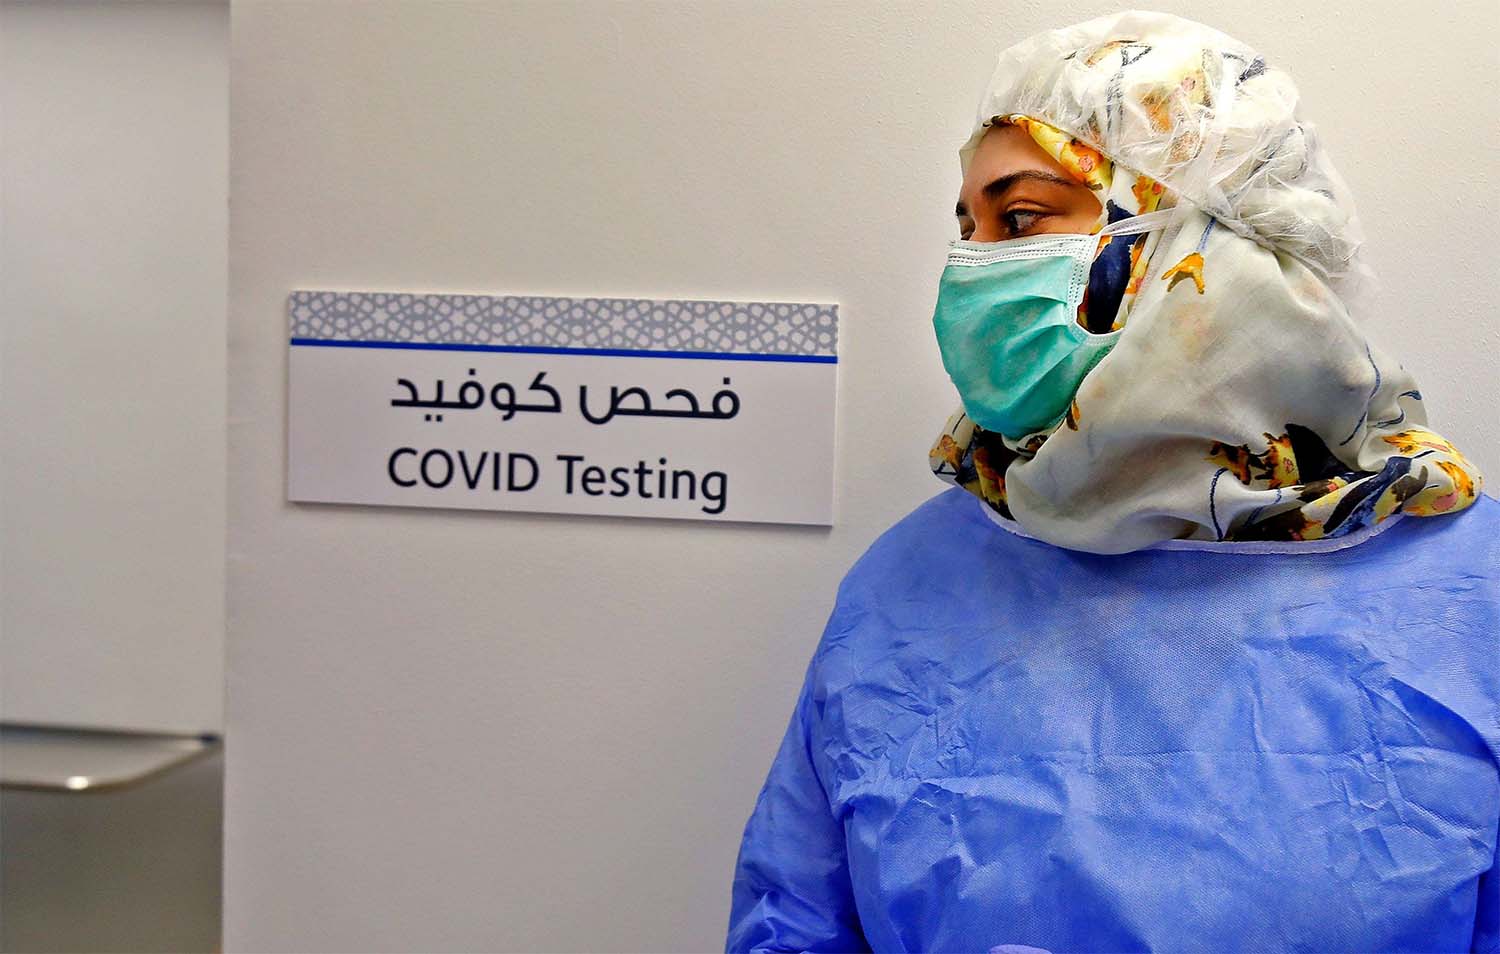 Qatar has one of the world's highest per capita coronavirus infection rates